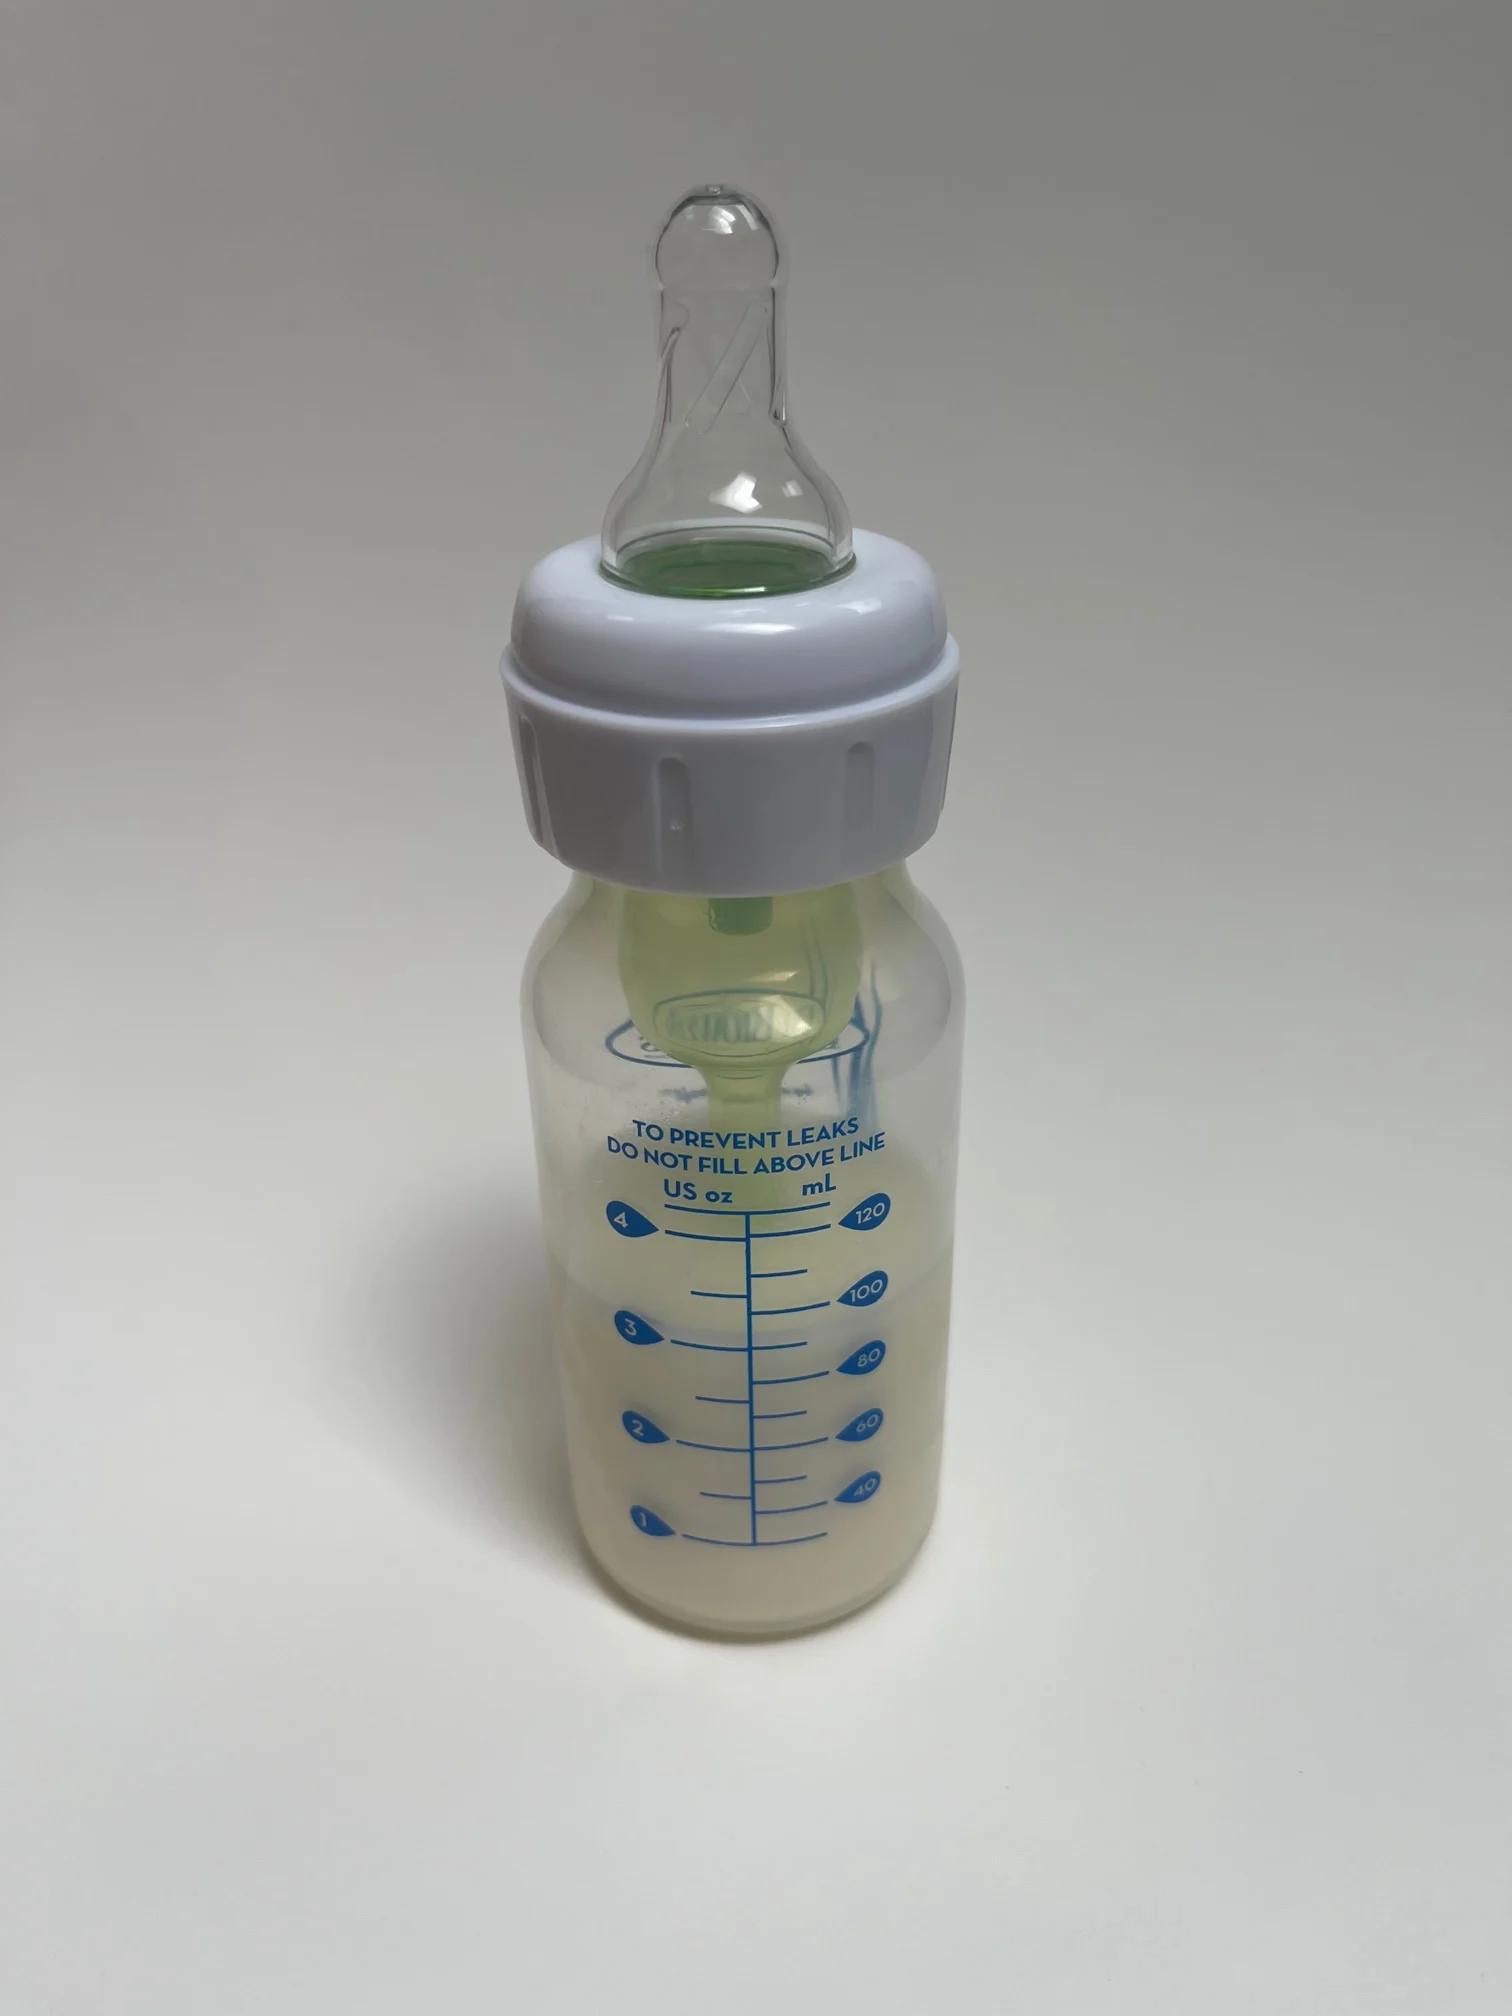 Best bottles for breastfed babies